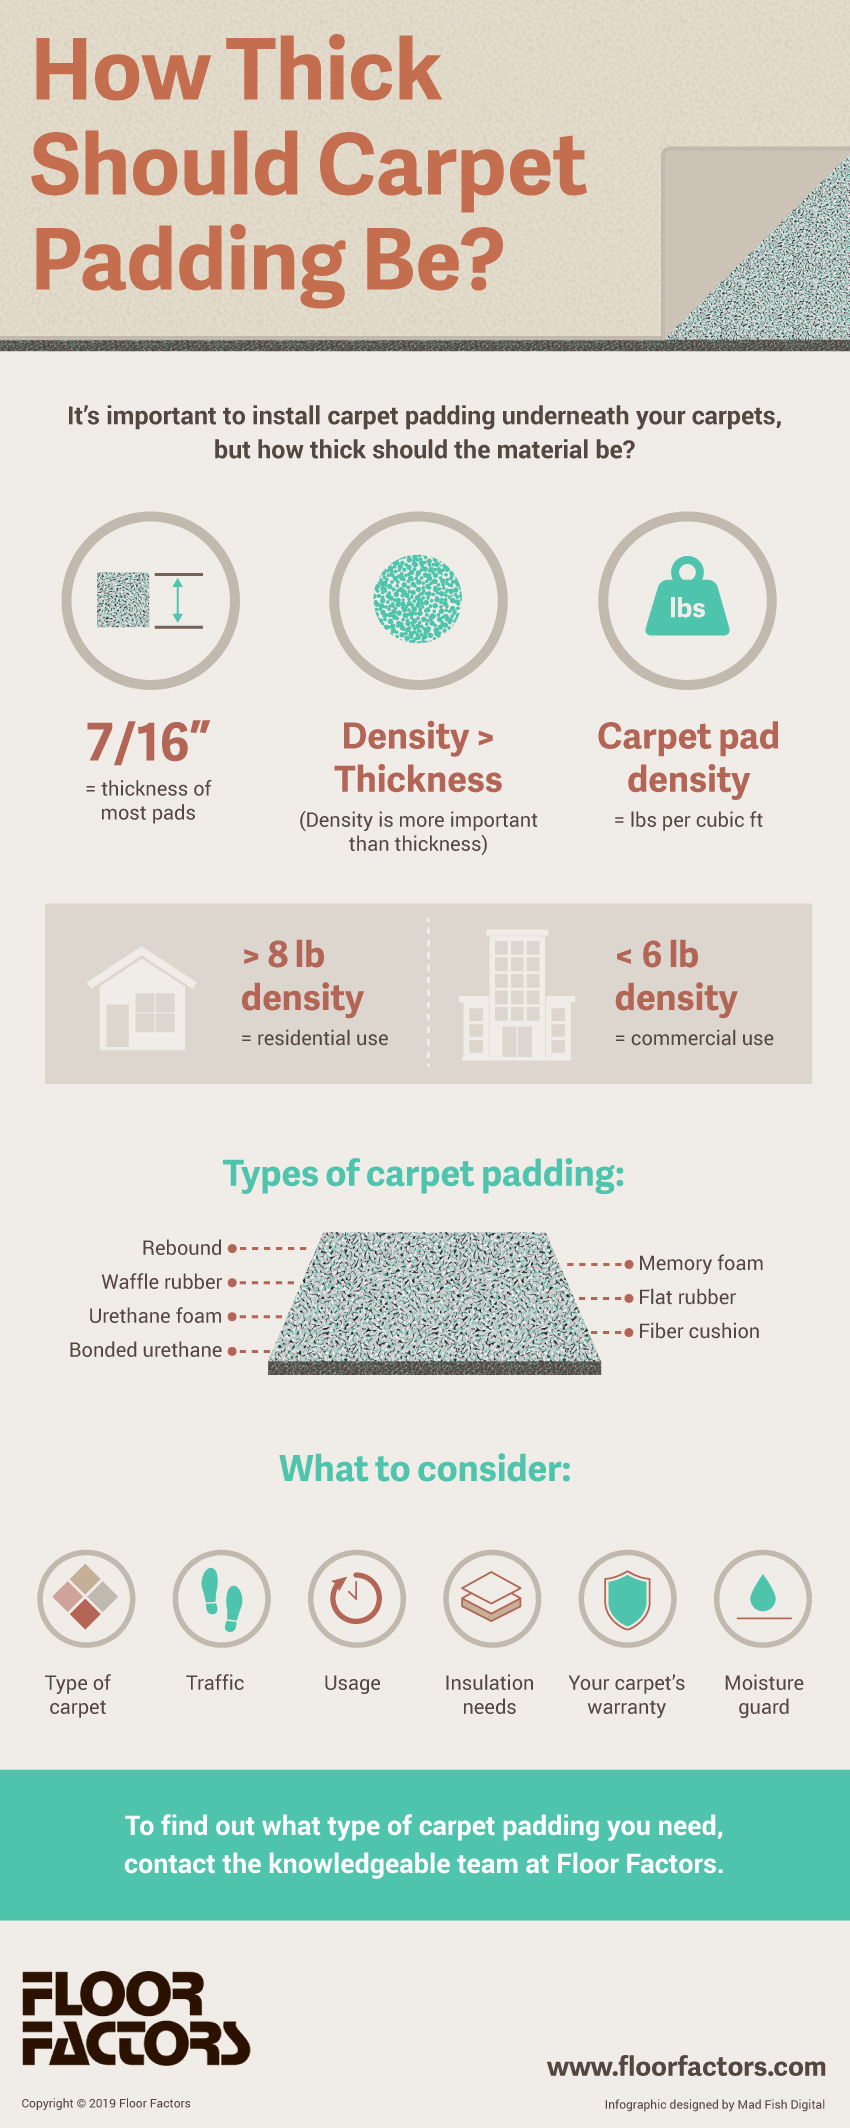 https://www.floorfactors.com/wp-content/uploads/2020/01/FloorFactor-How-Thick-Should-Carpet-Padding-Be-infographic.jpg